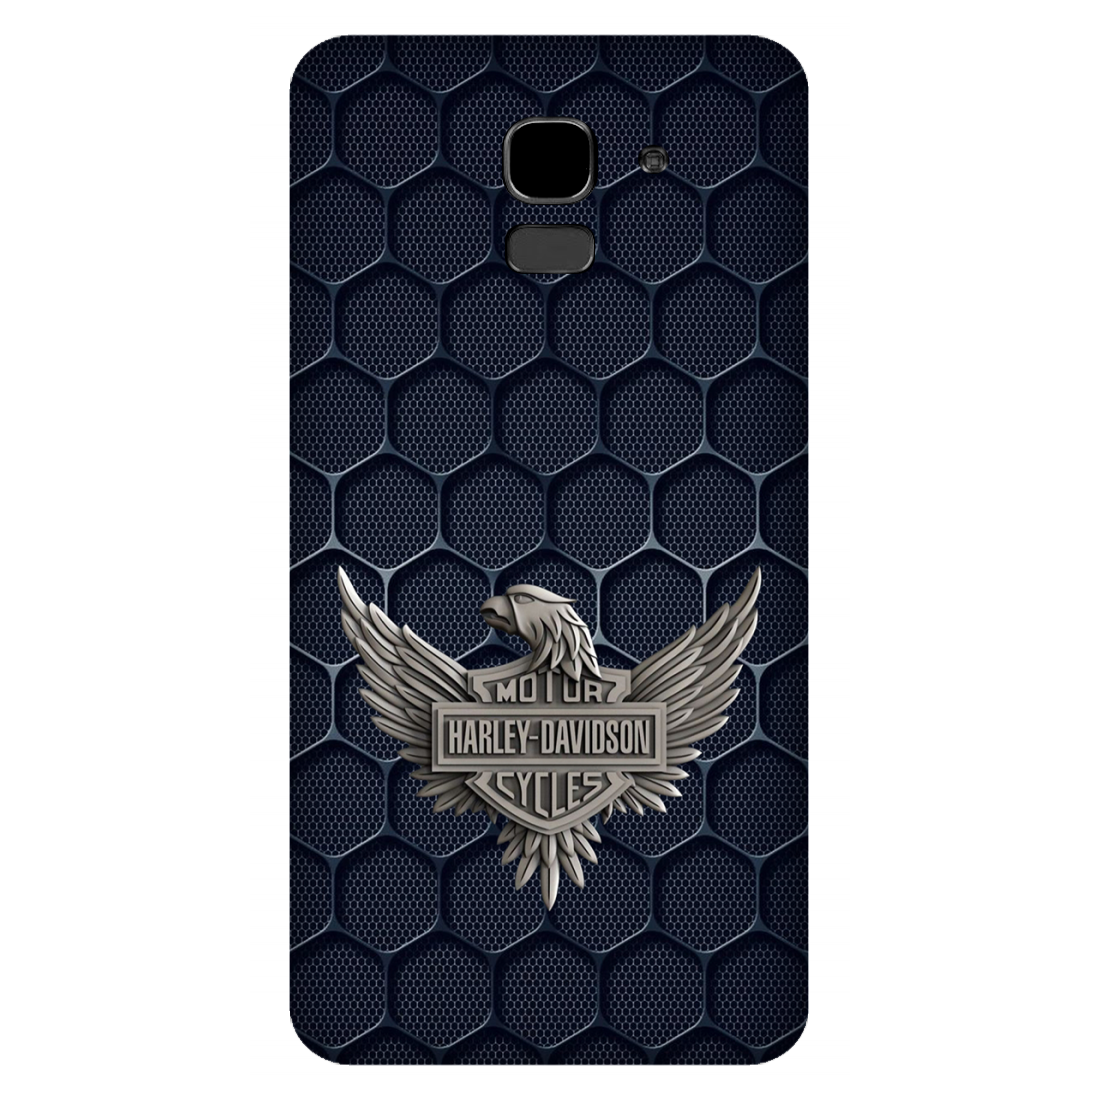 Harley-Davidson Emblem on Hexagonal Pattern Case Samsung Galaxy J6